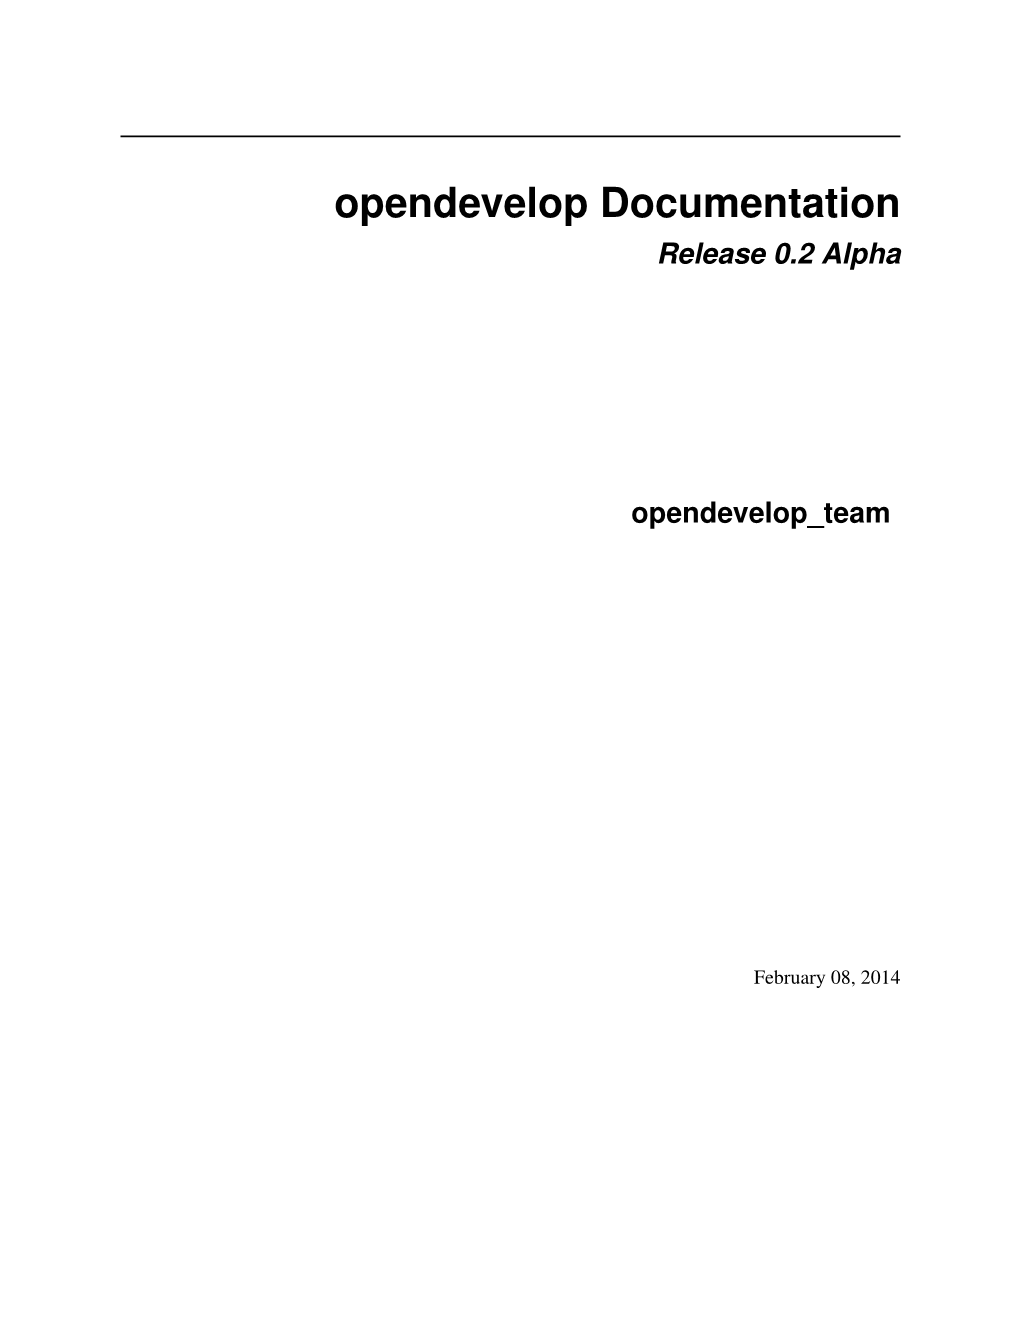 Opendevelop Documentation Release 0.2 Alpha